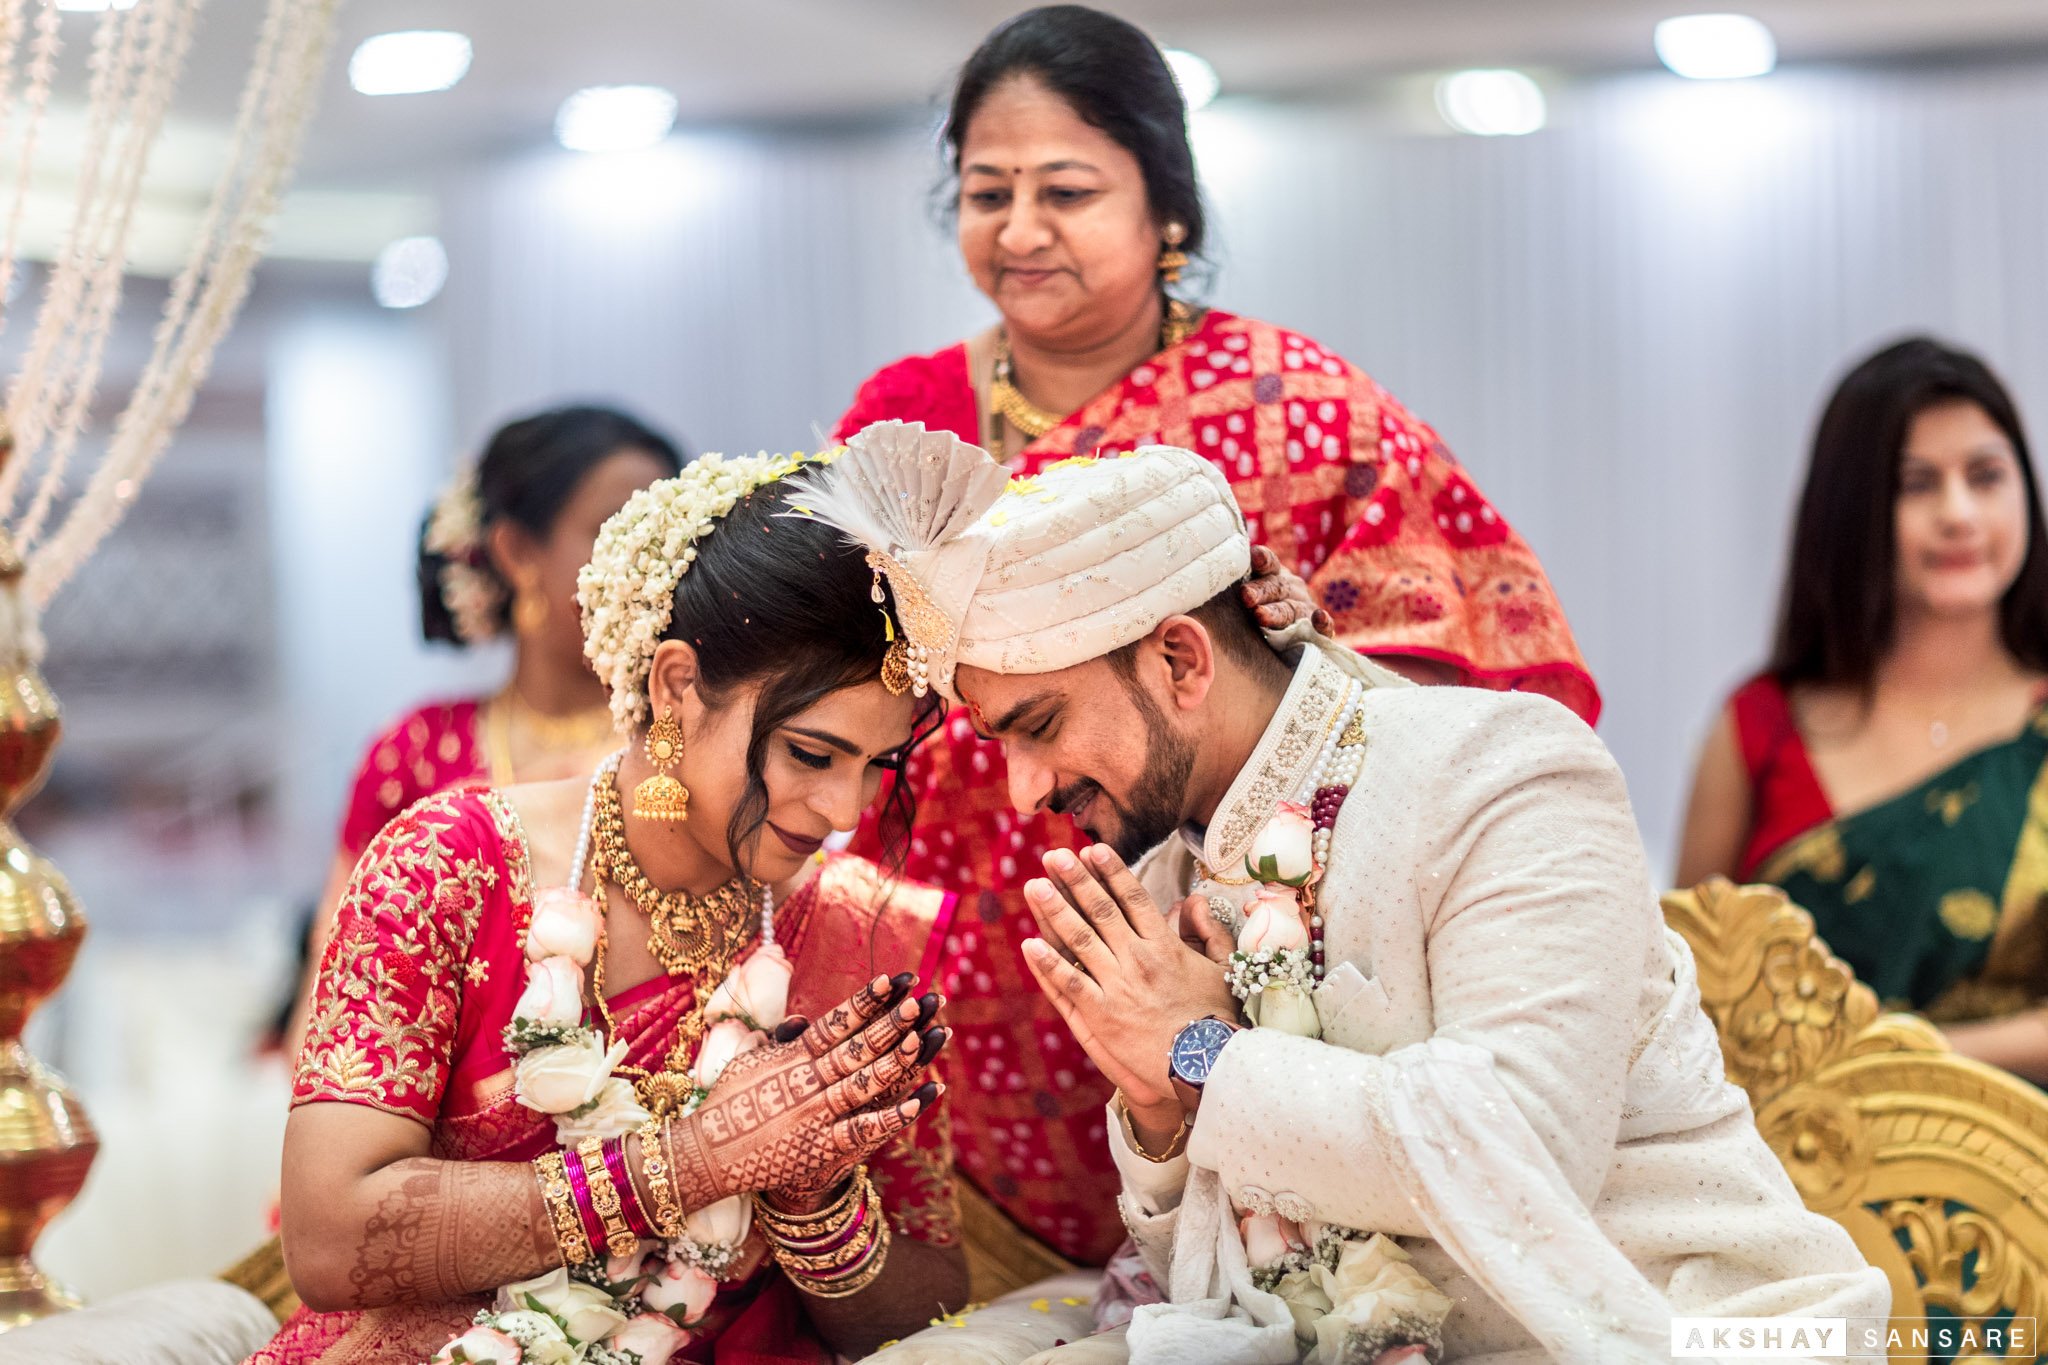 Lipika x Bhavya Compress Akshay Sansare Photography & Films Best wedding photographers in mumbai india-52.jpg